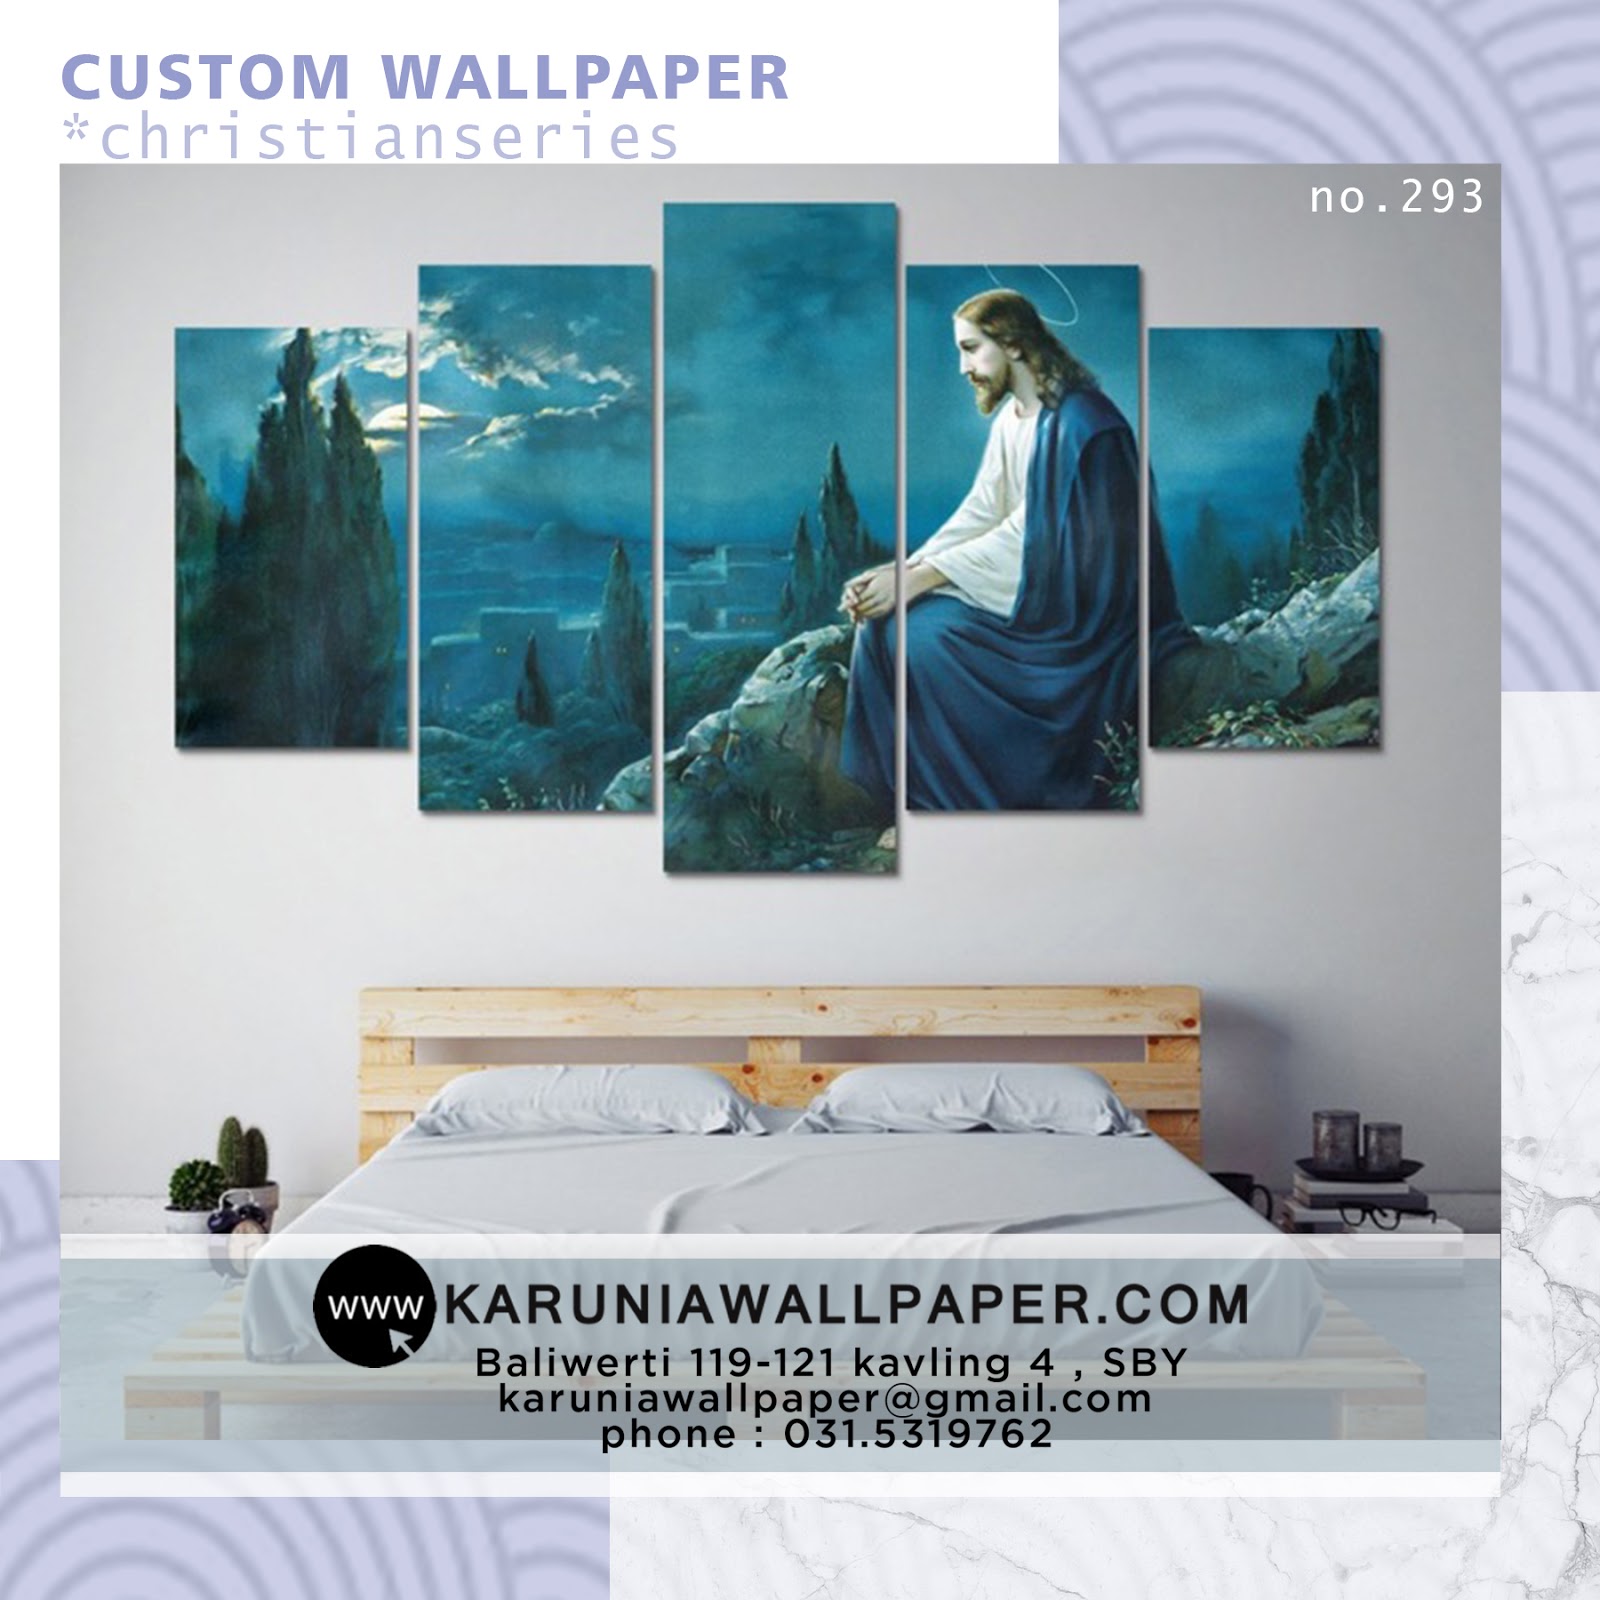 jual wallpaper custom kristen katolik